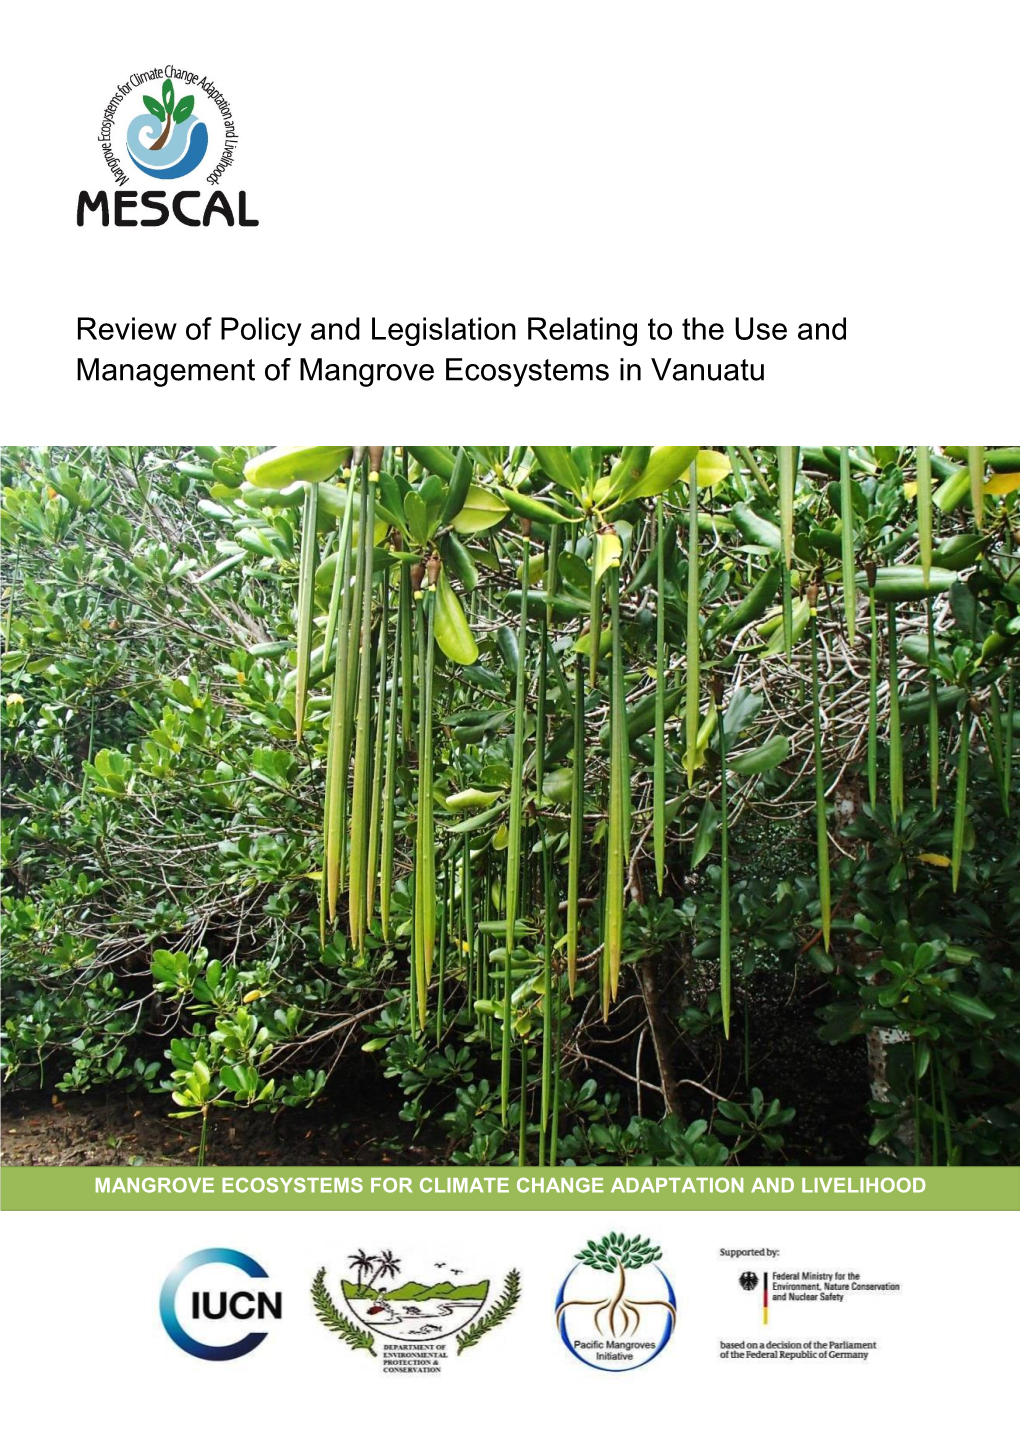 Vanuatu Policy and Legislative Review Report